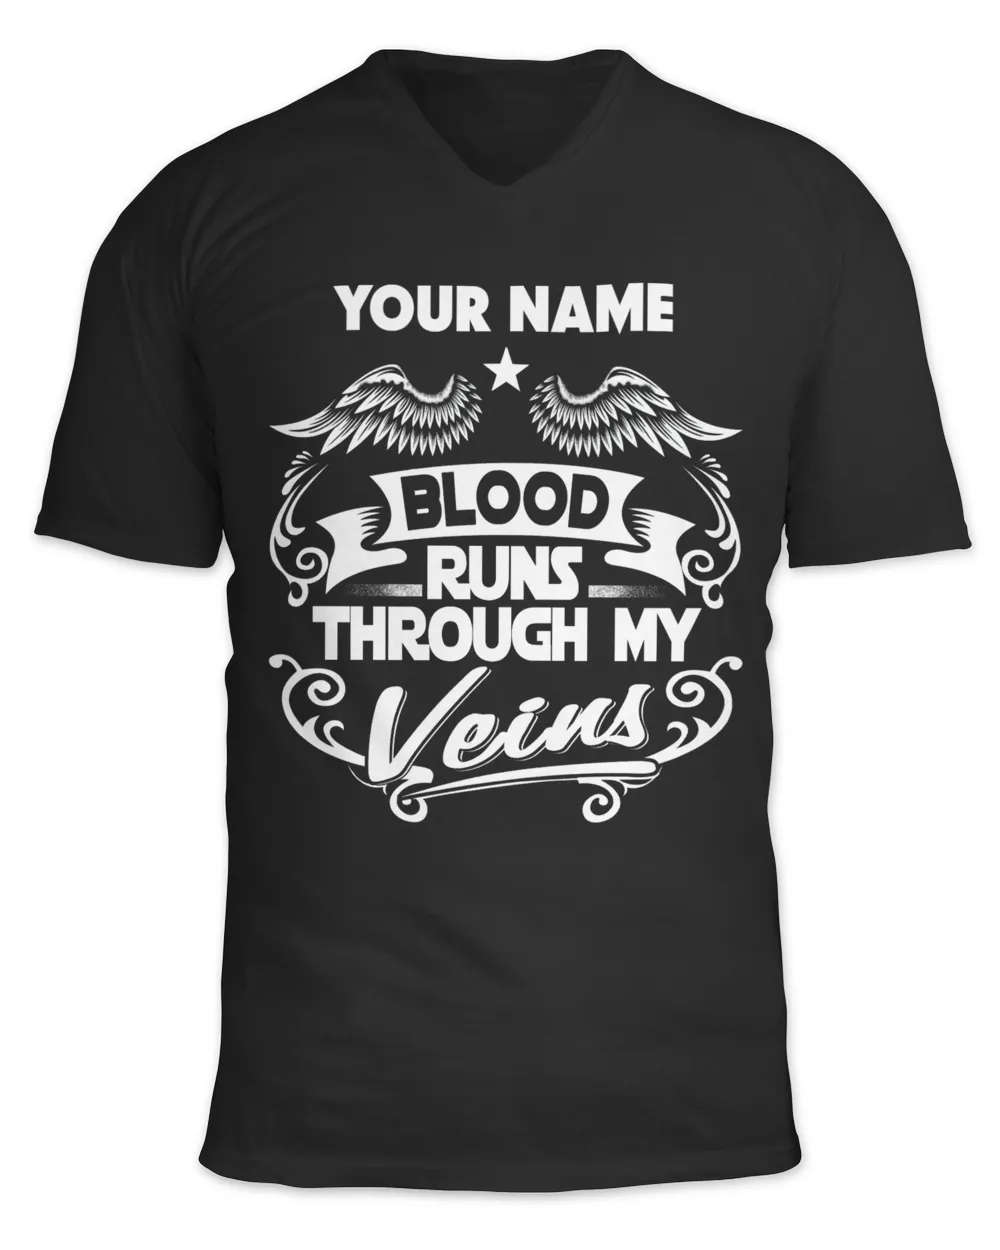 [Personalize] Blood runs through